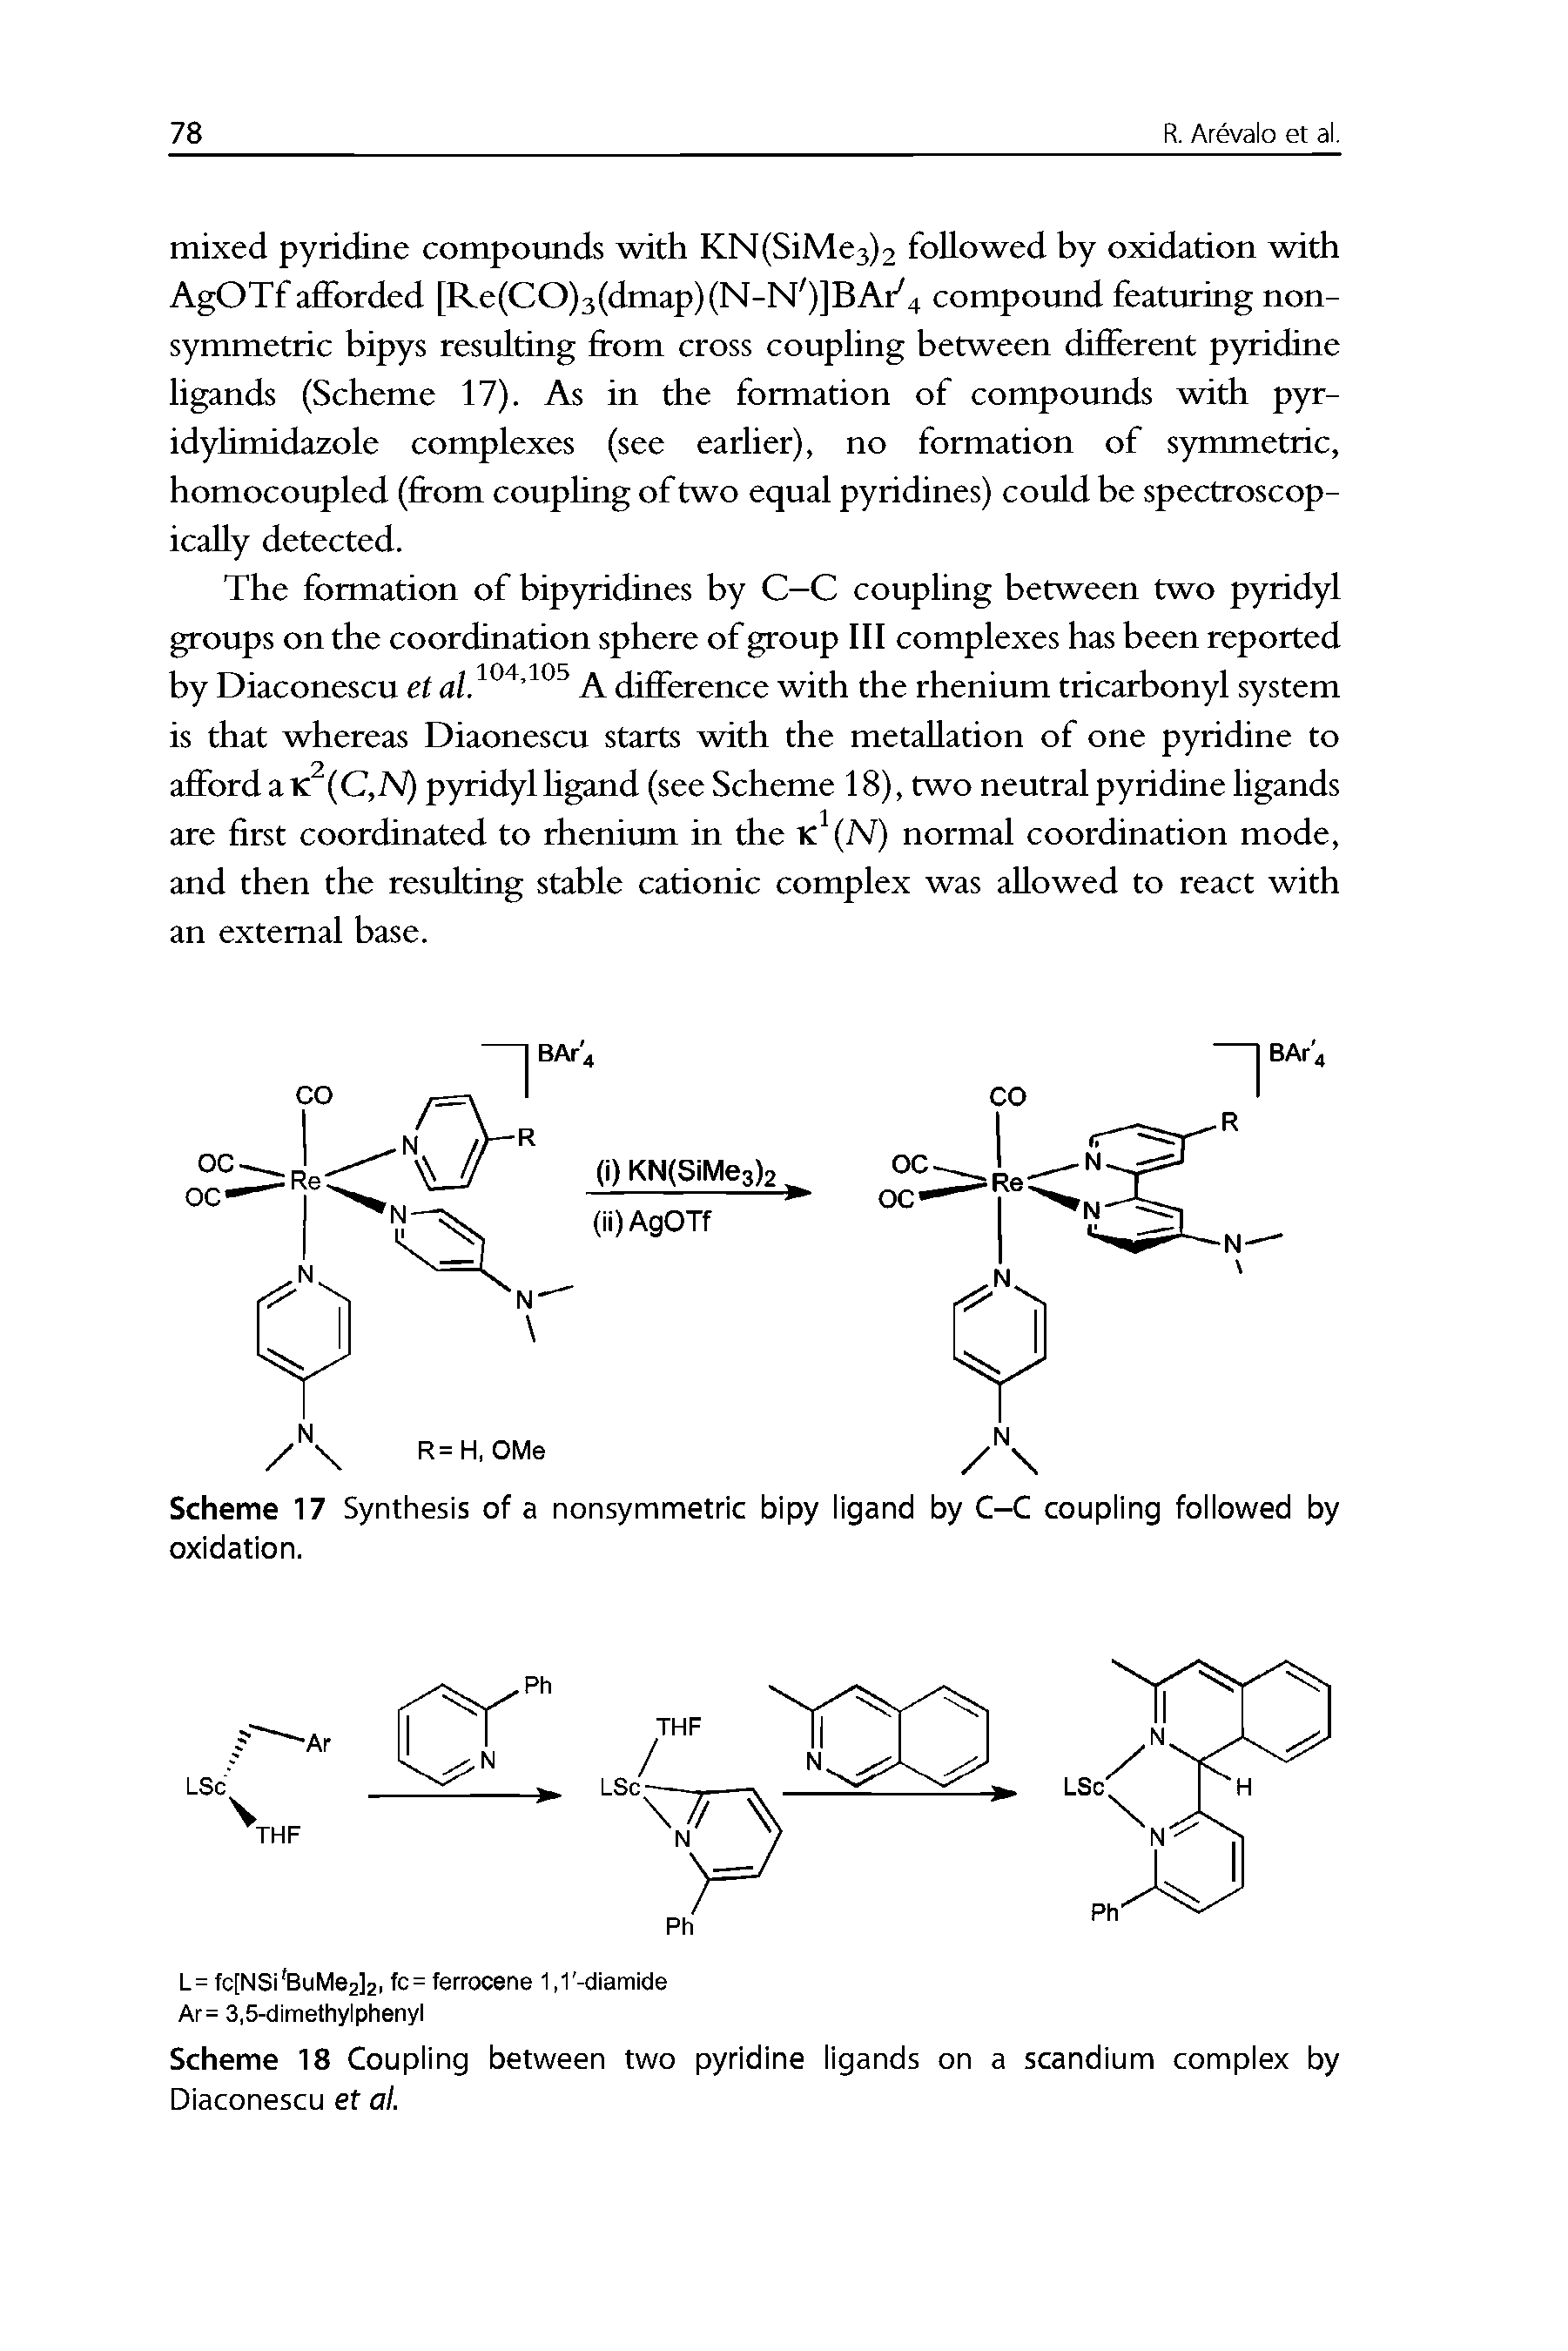 Scheme 18 Coupling between two pyridine ligands on a scandium complex by Diaconescu et al.